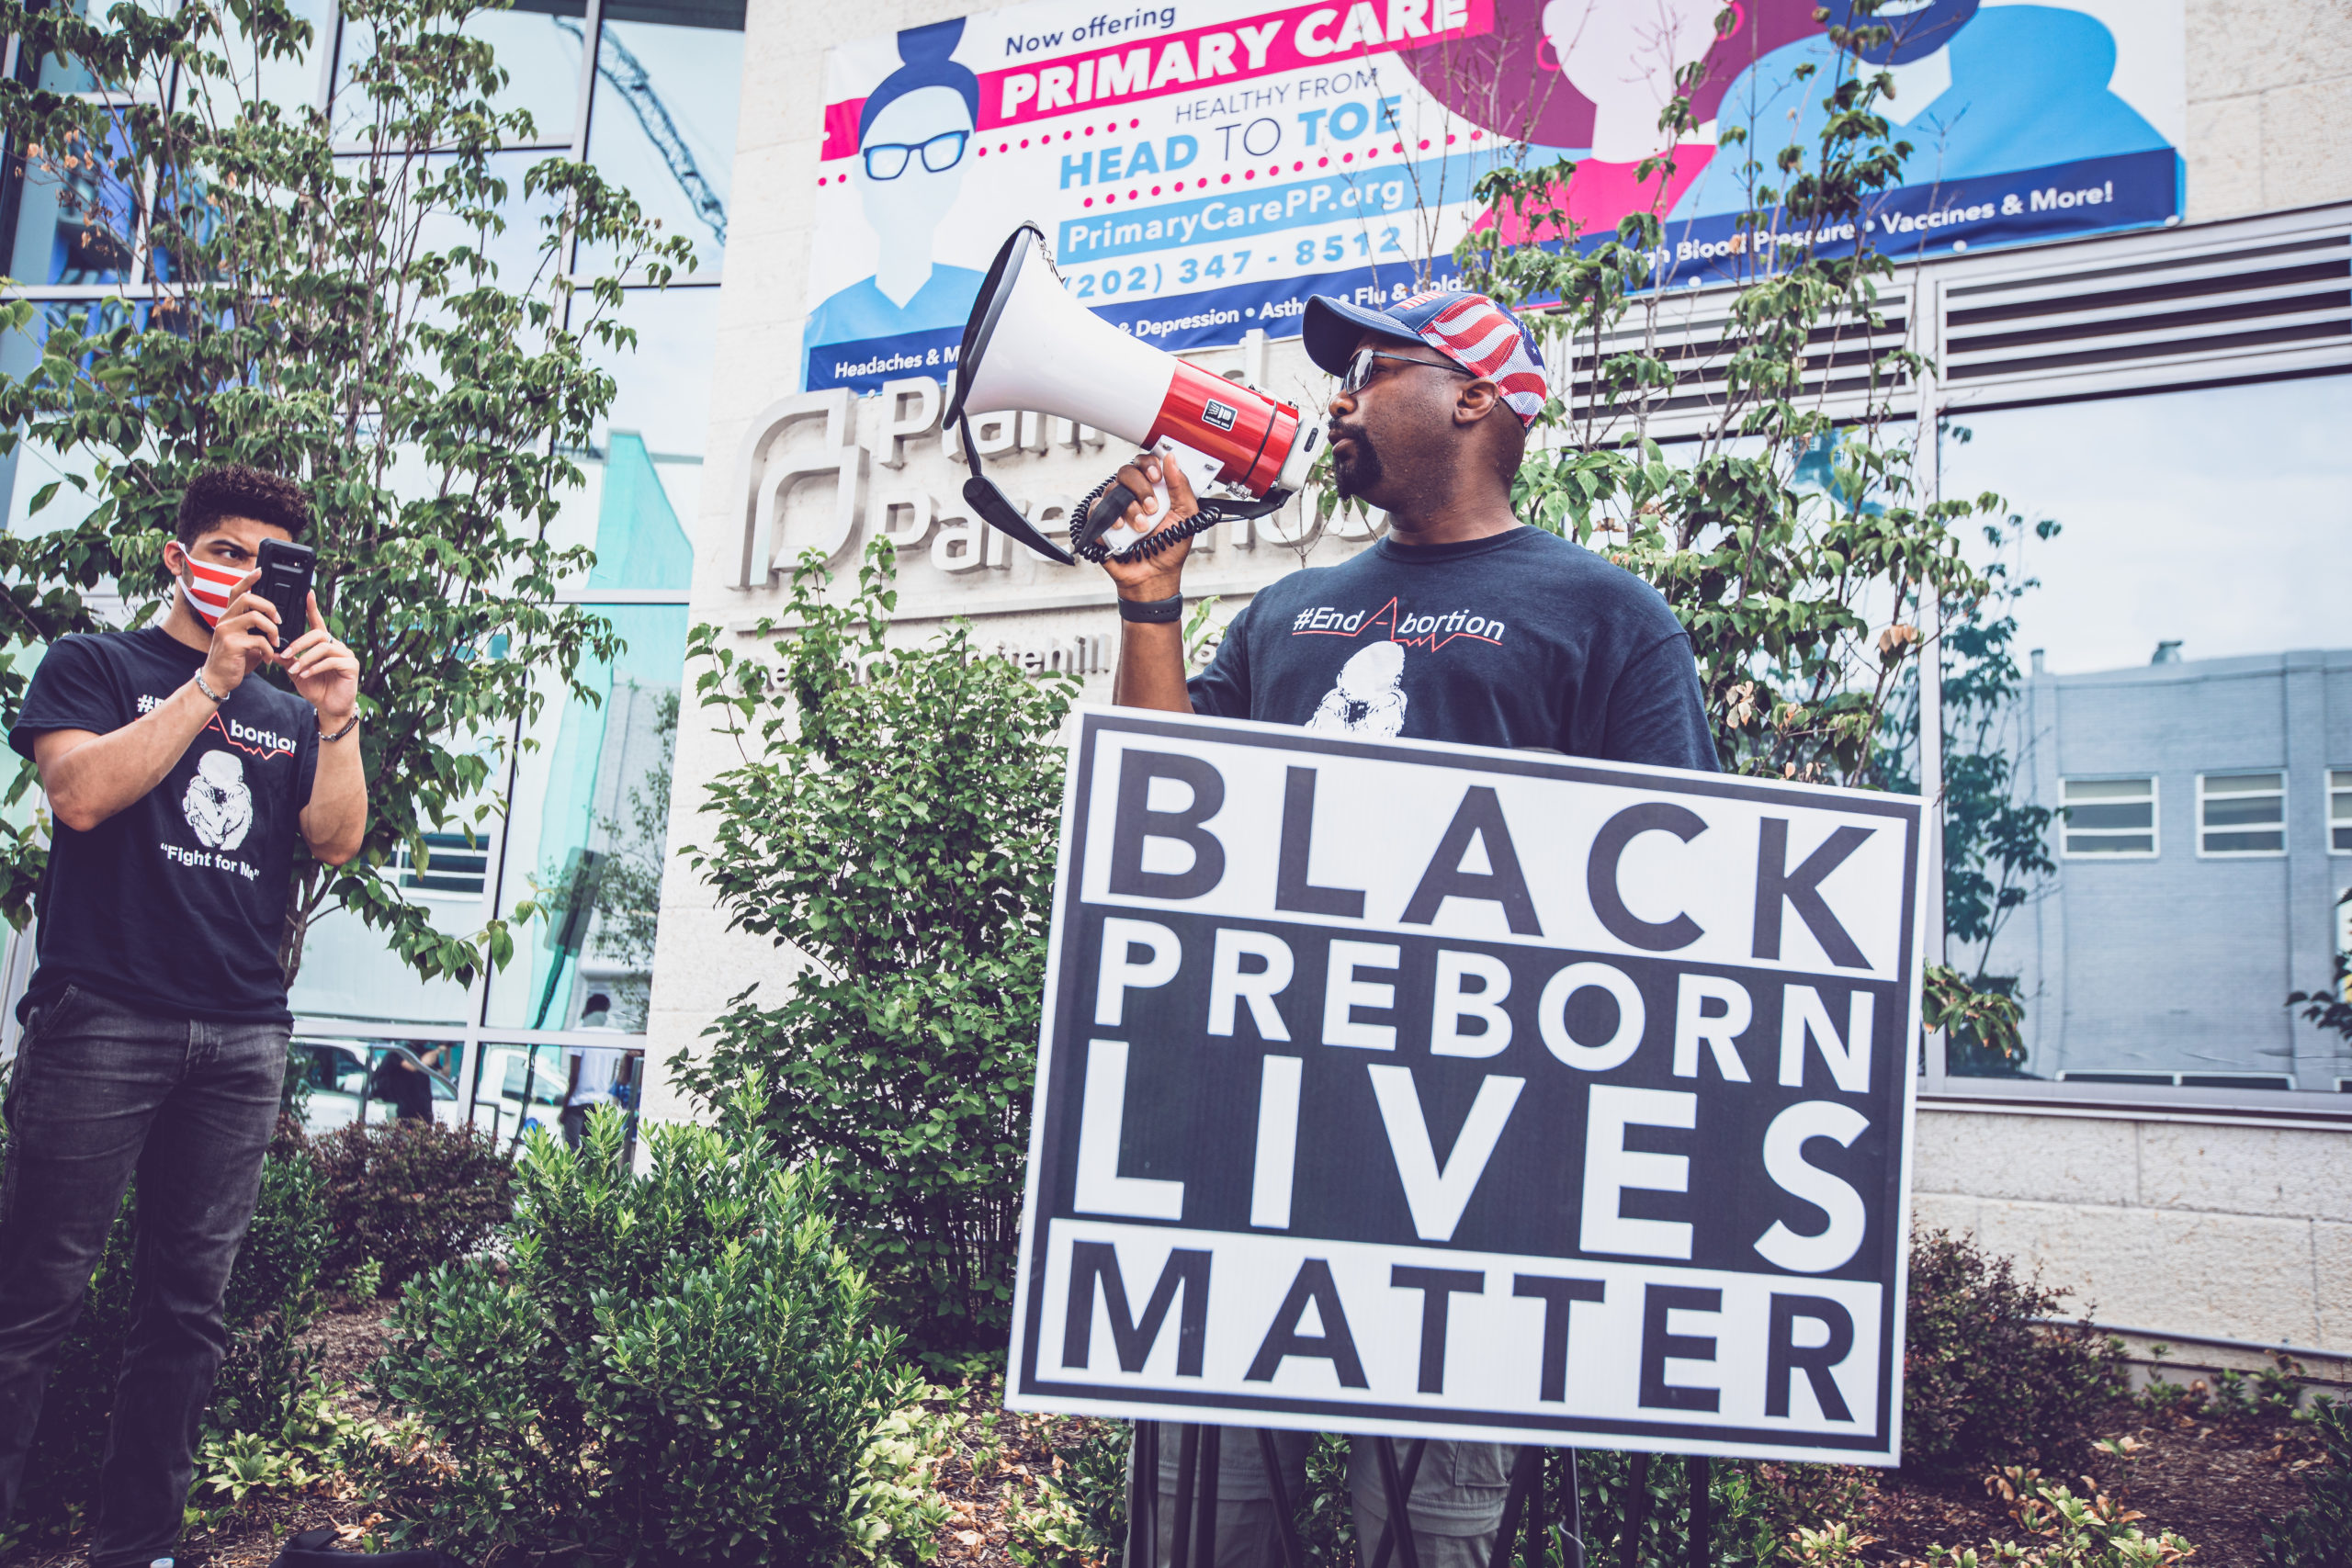 Pro-Life protesters arrested for writing ‘Black Pre-Born Lives Matter’ on sidewalk